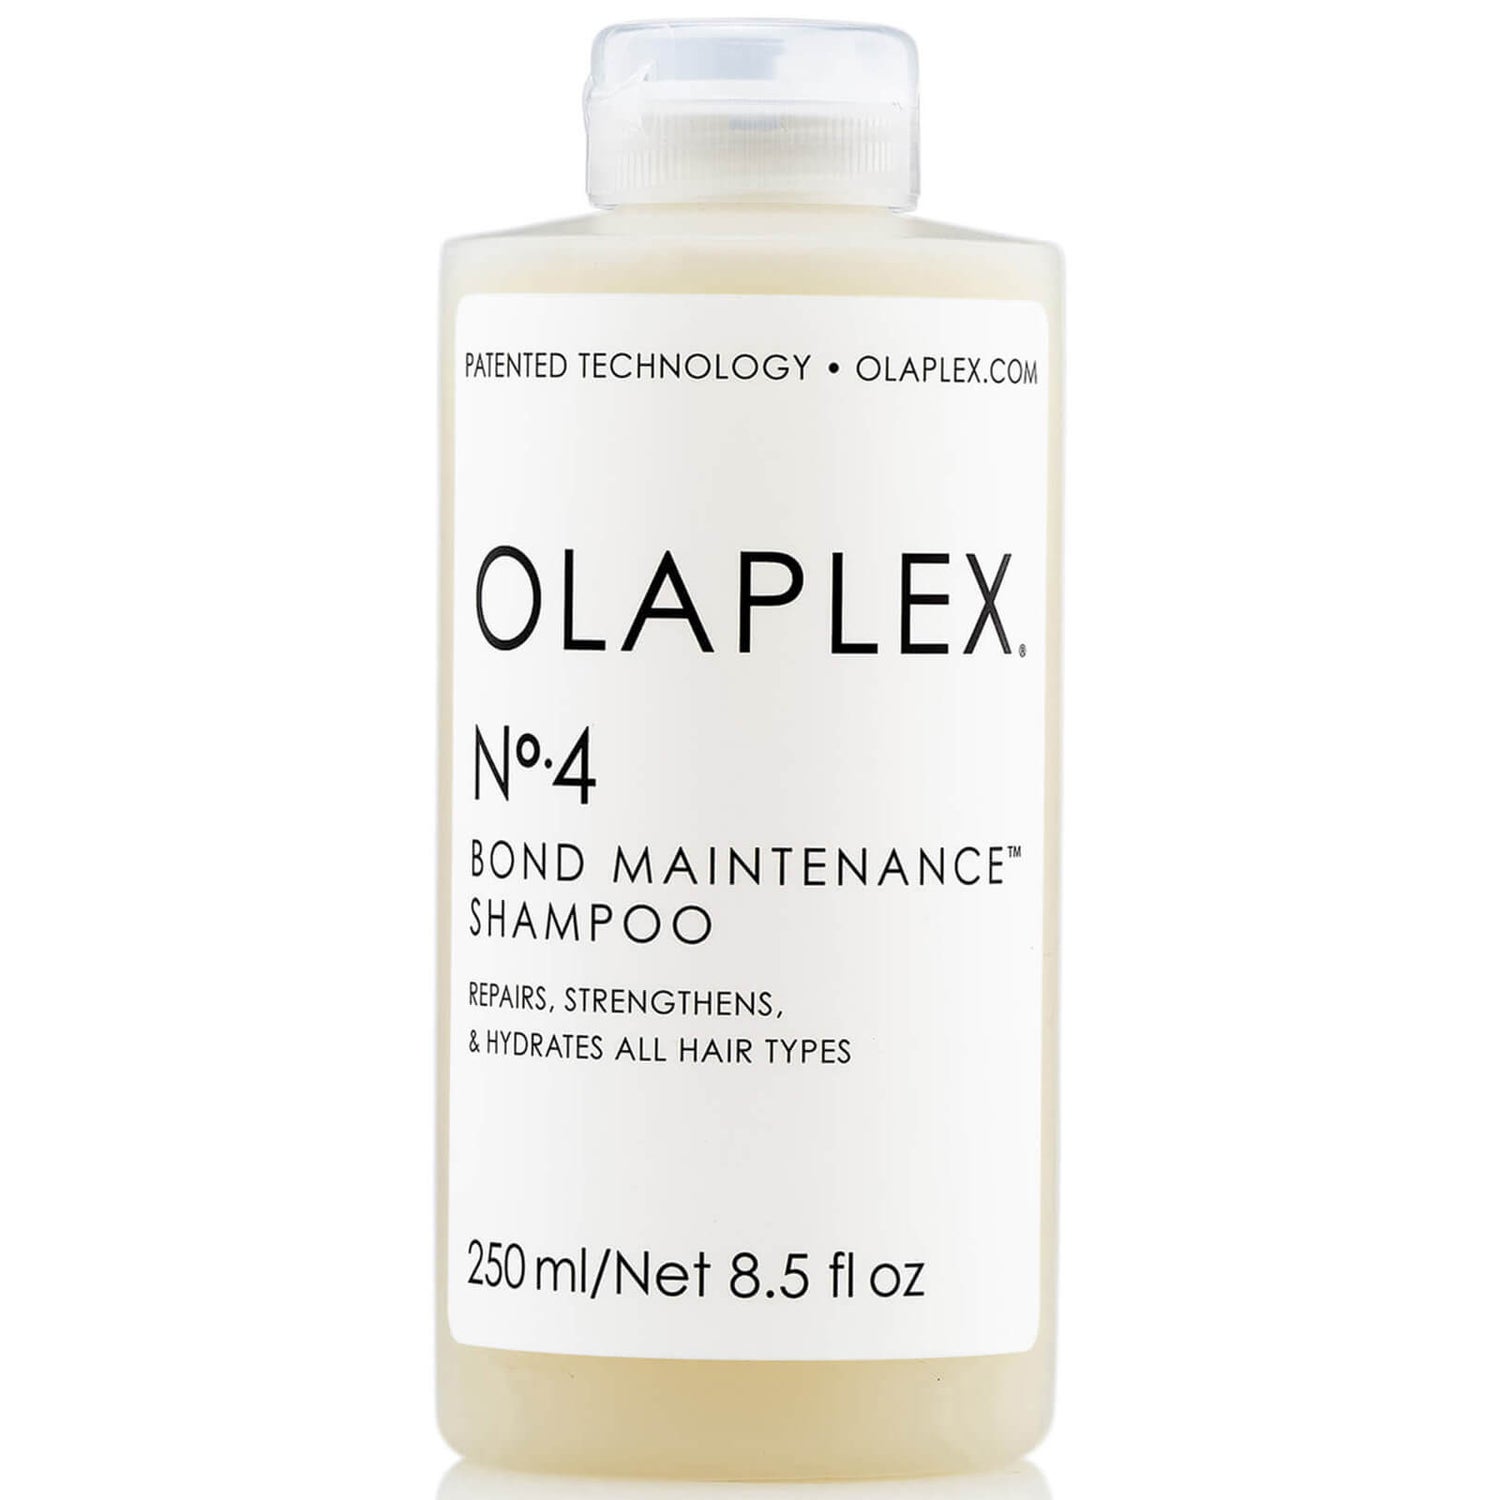 Olaplex no 4 bond maintenance shampoo stylus pen ipad